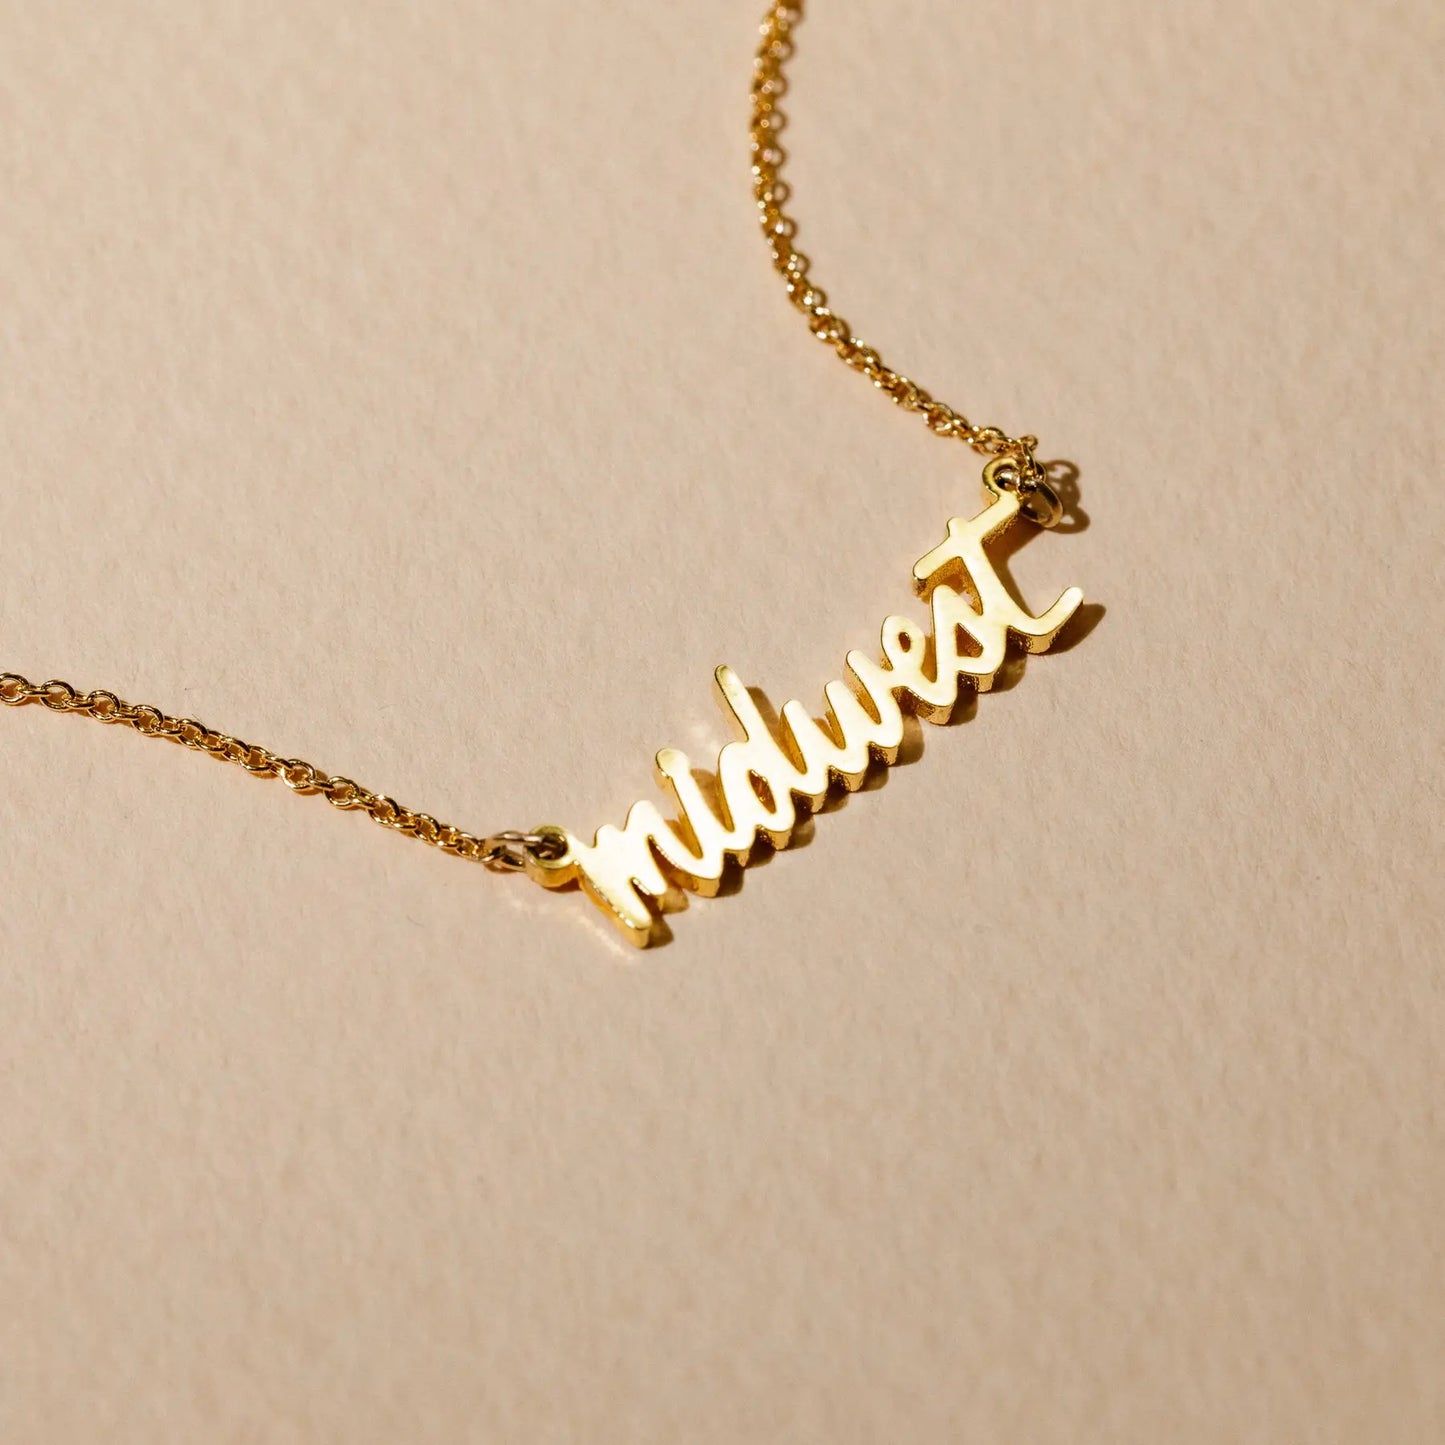 Midwest Script 14k Gold Filled Necklace